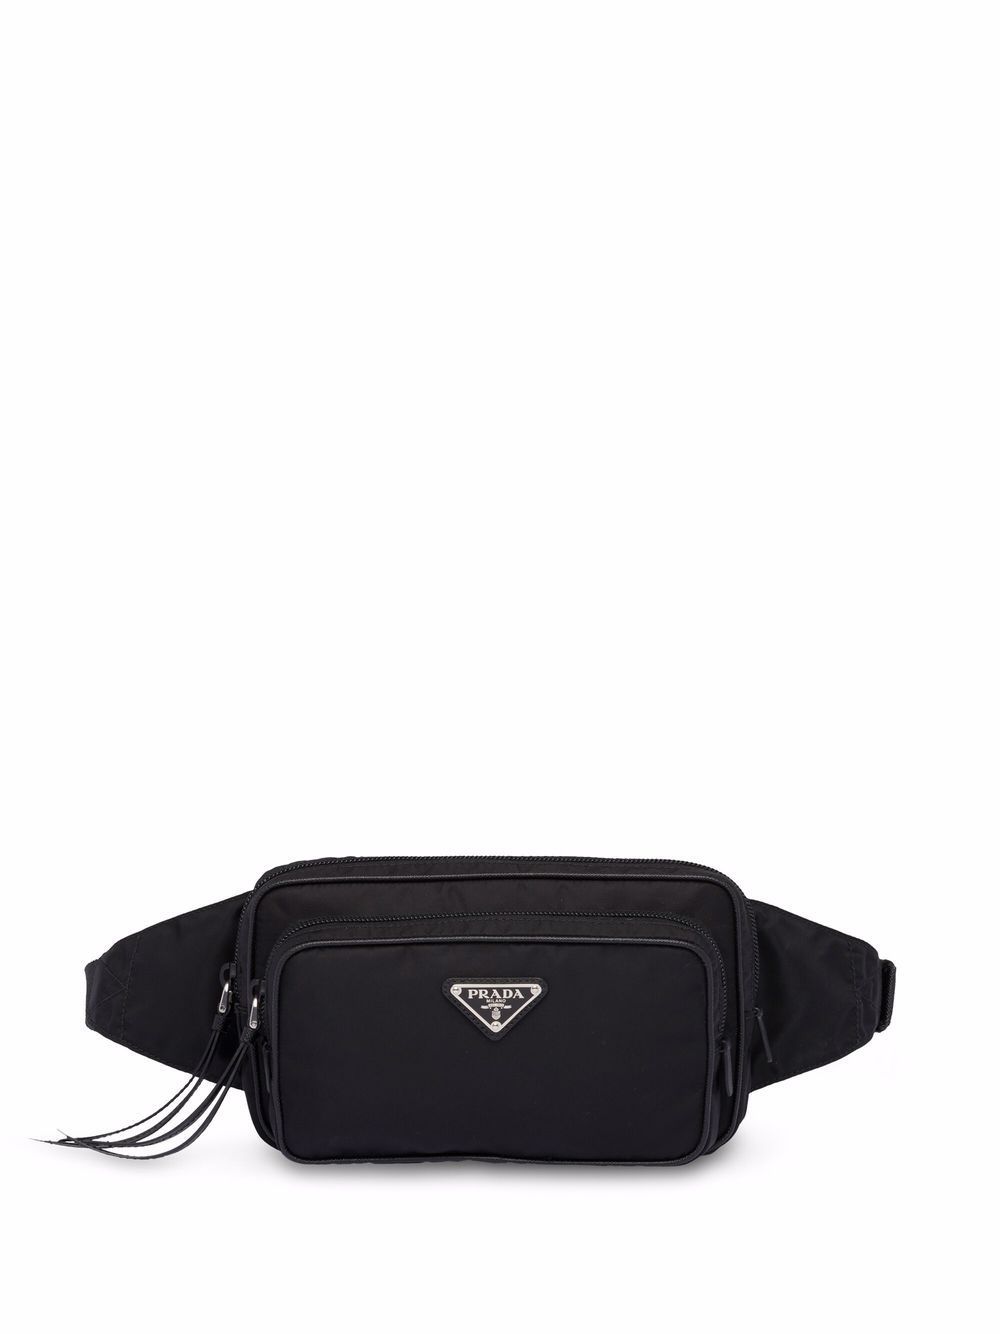 Túi Gucci GG Marmont Belt Bag đen 16cm best quality